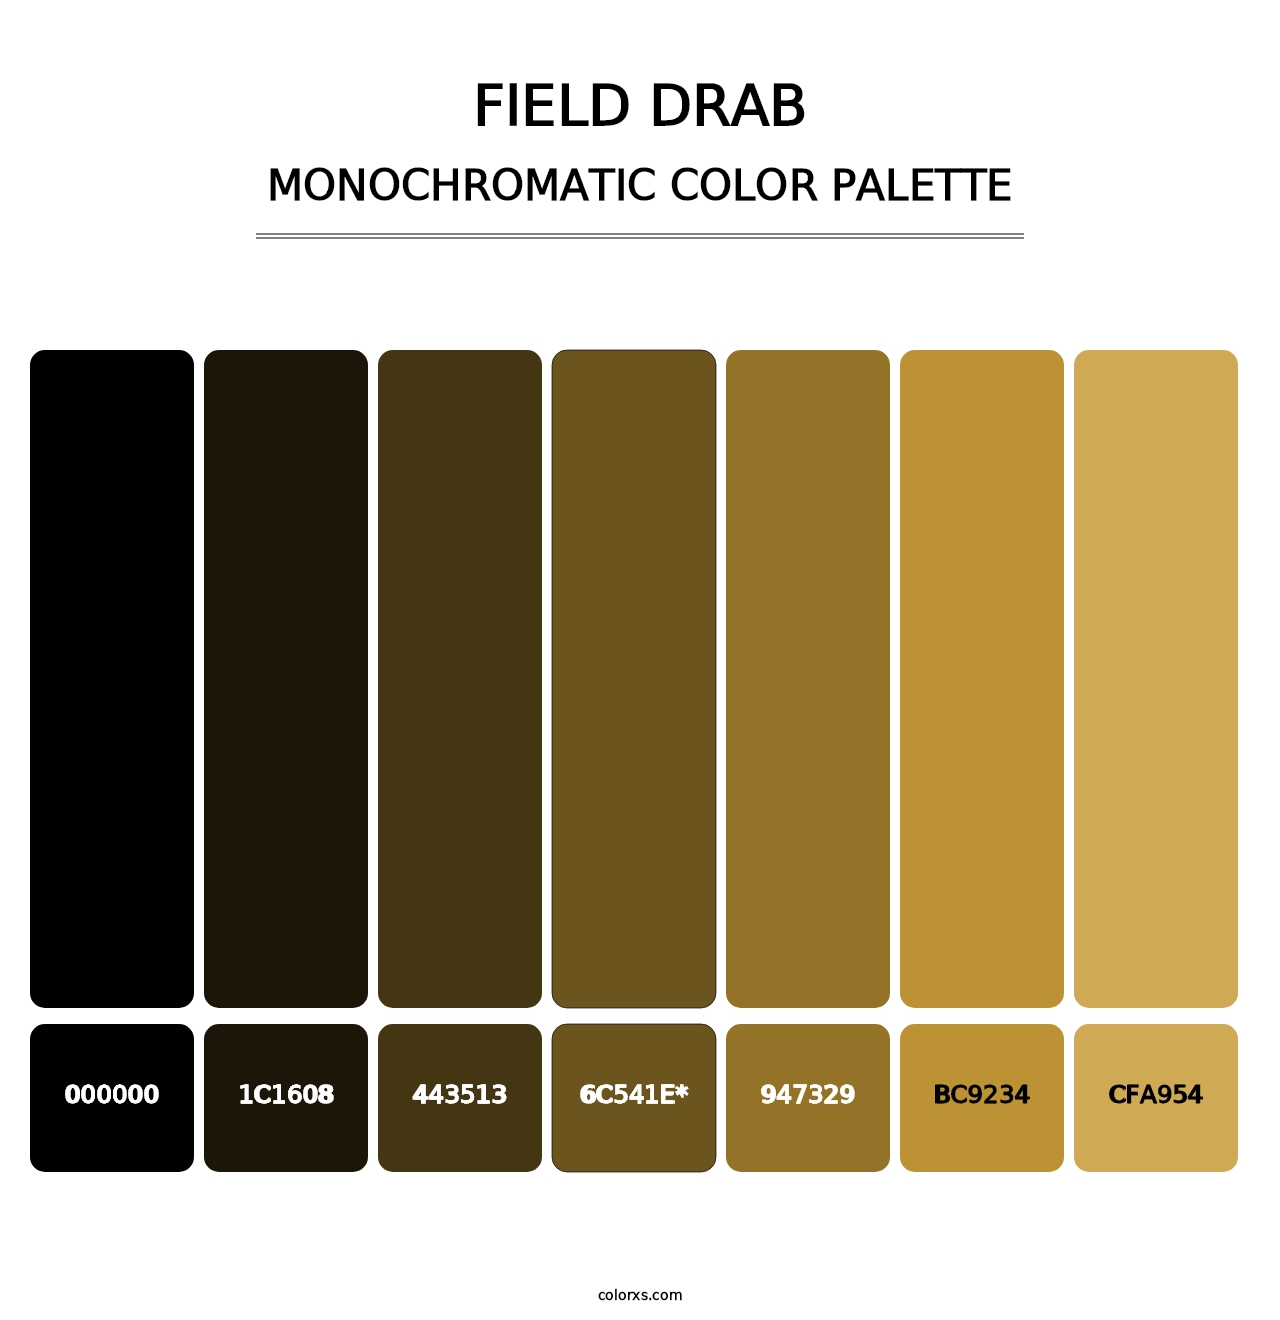 Field Drab - Monochromatic Color Palette